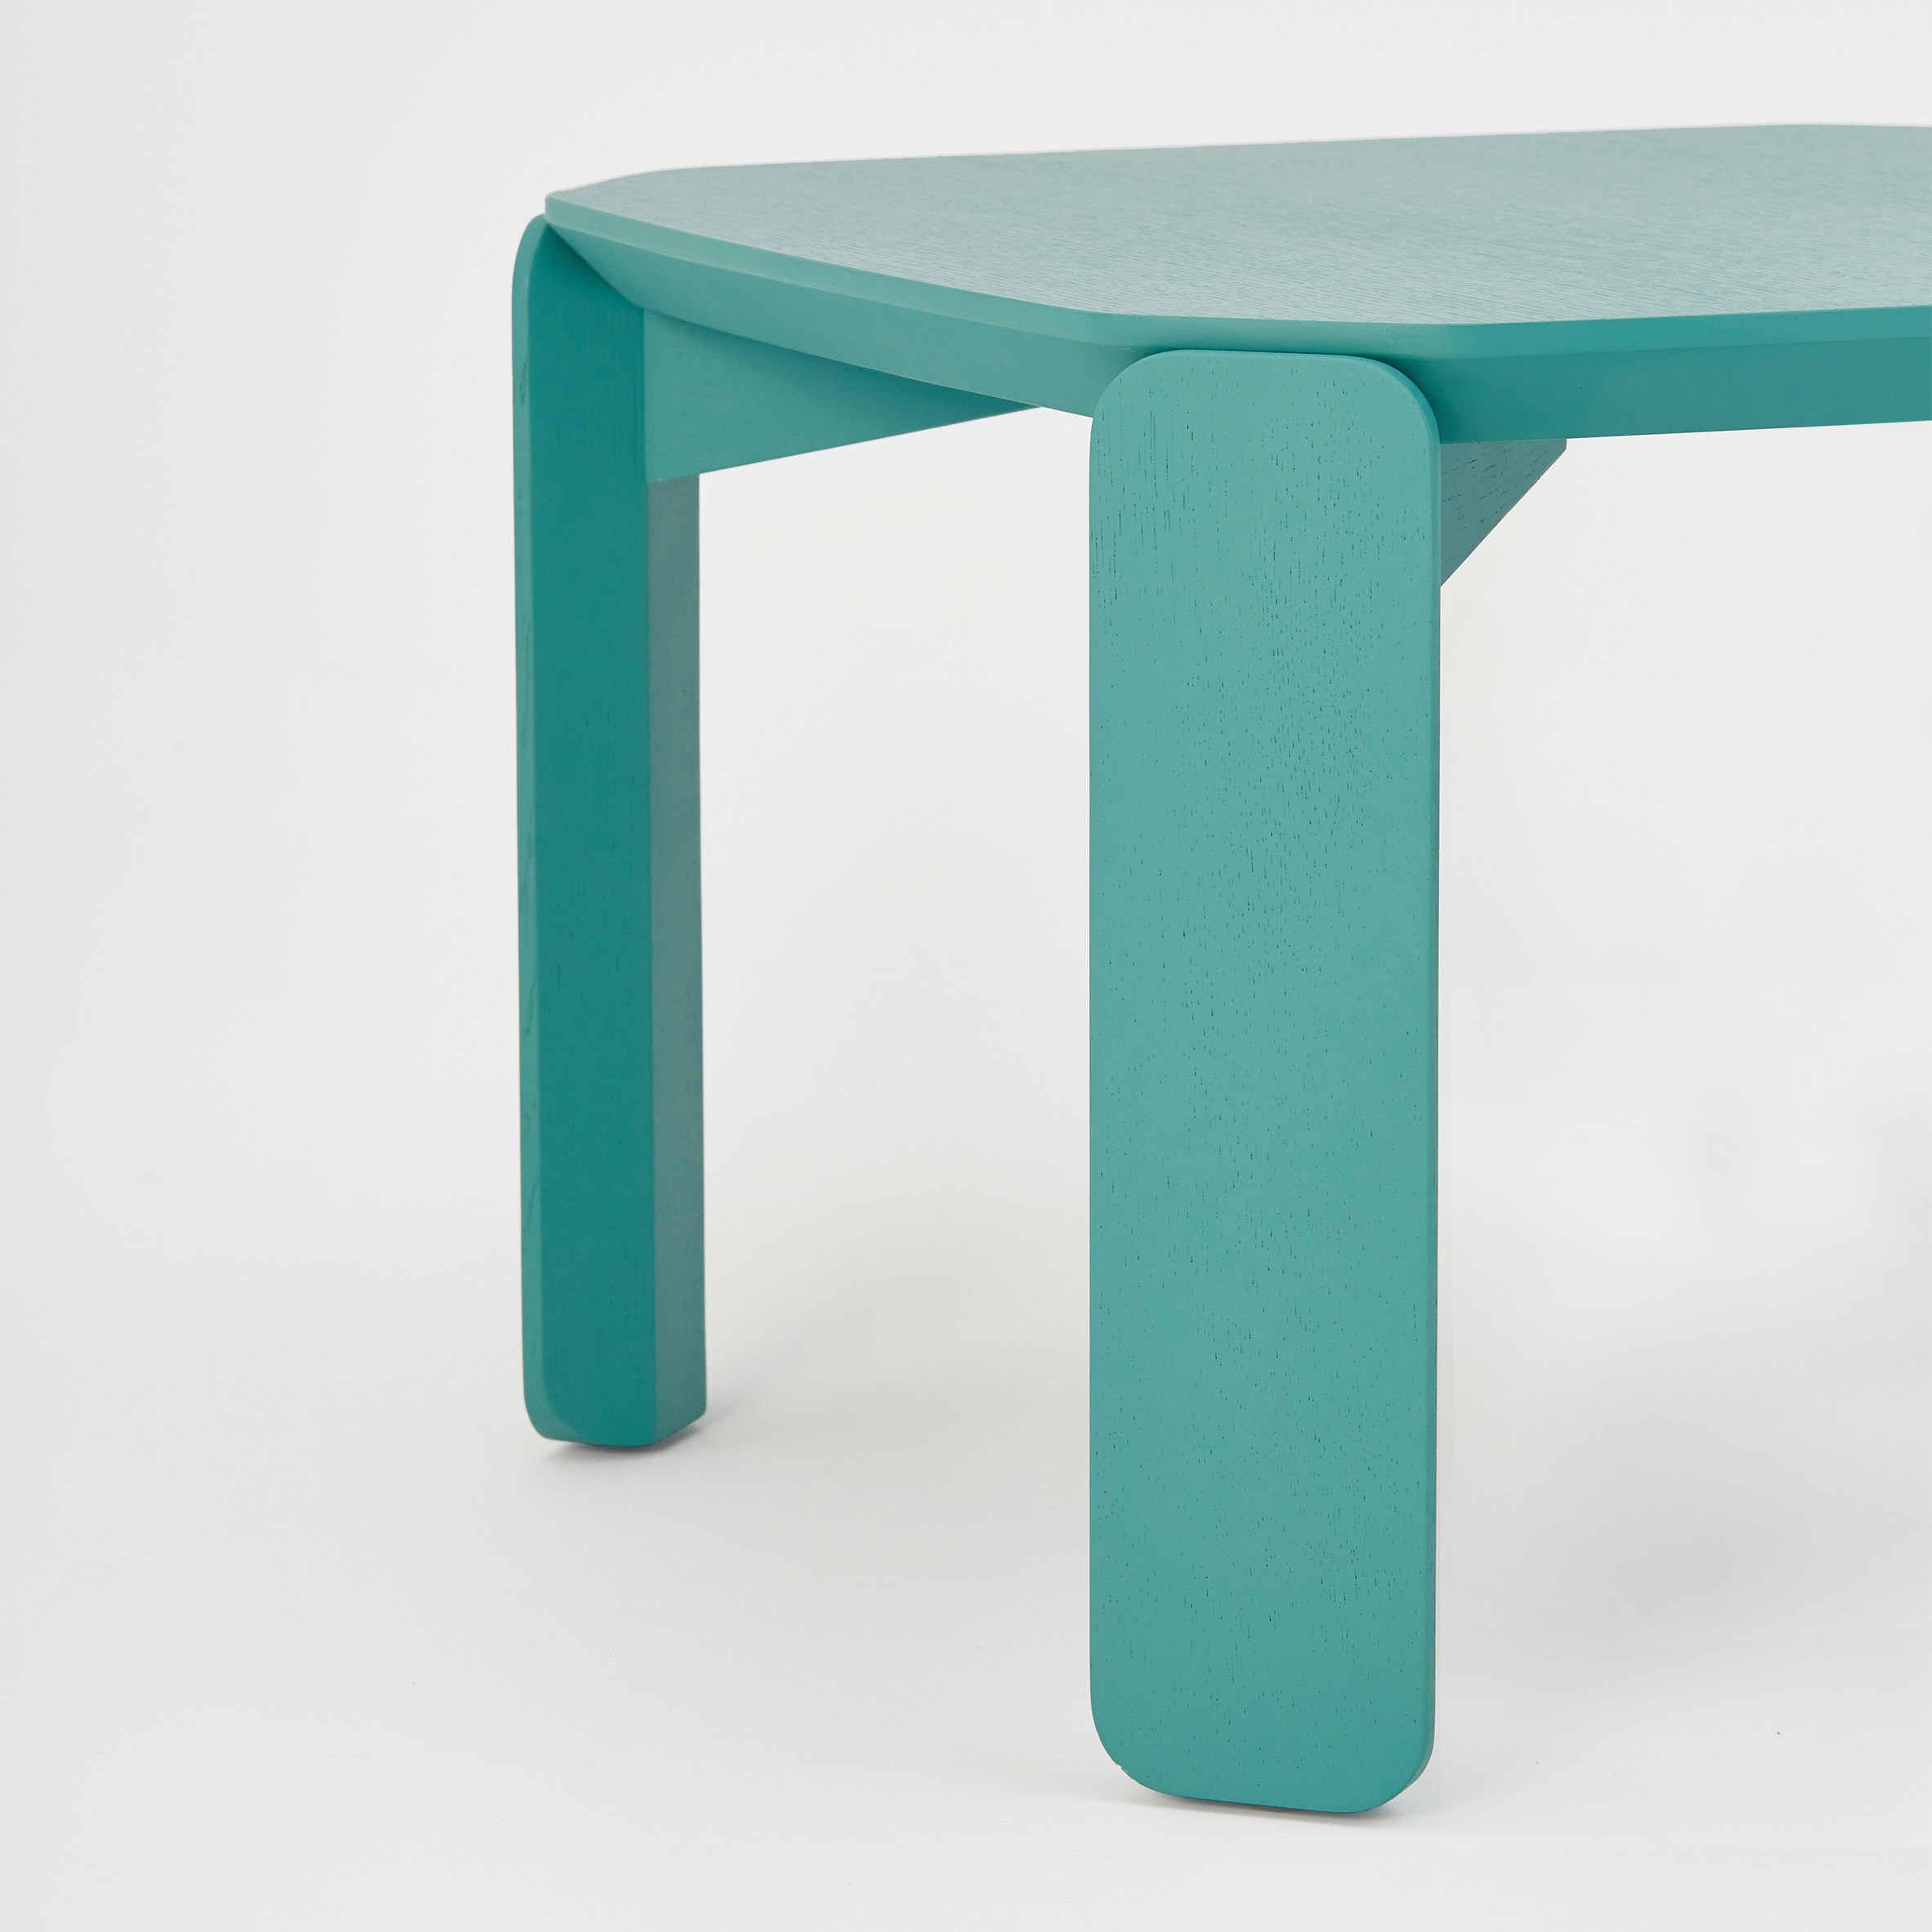 45-table-system-inyard-la-selva-design-furniture_dezeen_2364_col_6